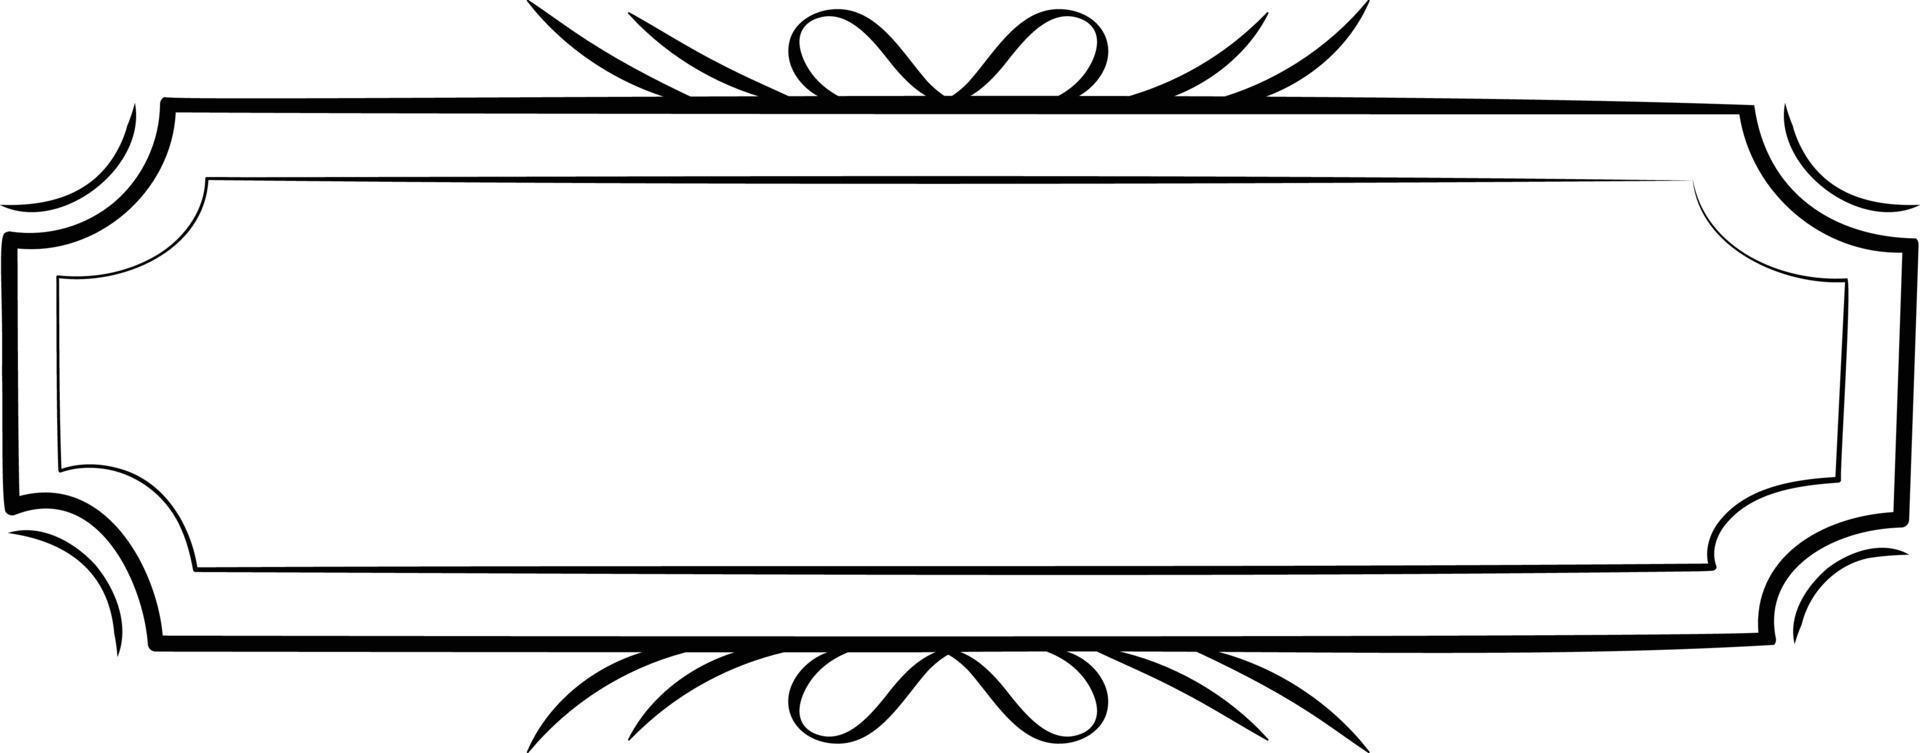 Black ornamental frame element vector